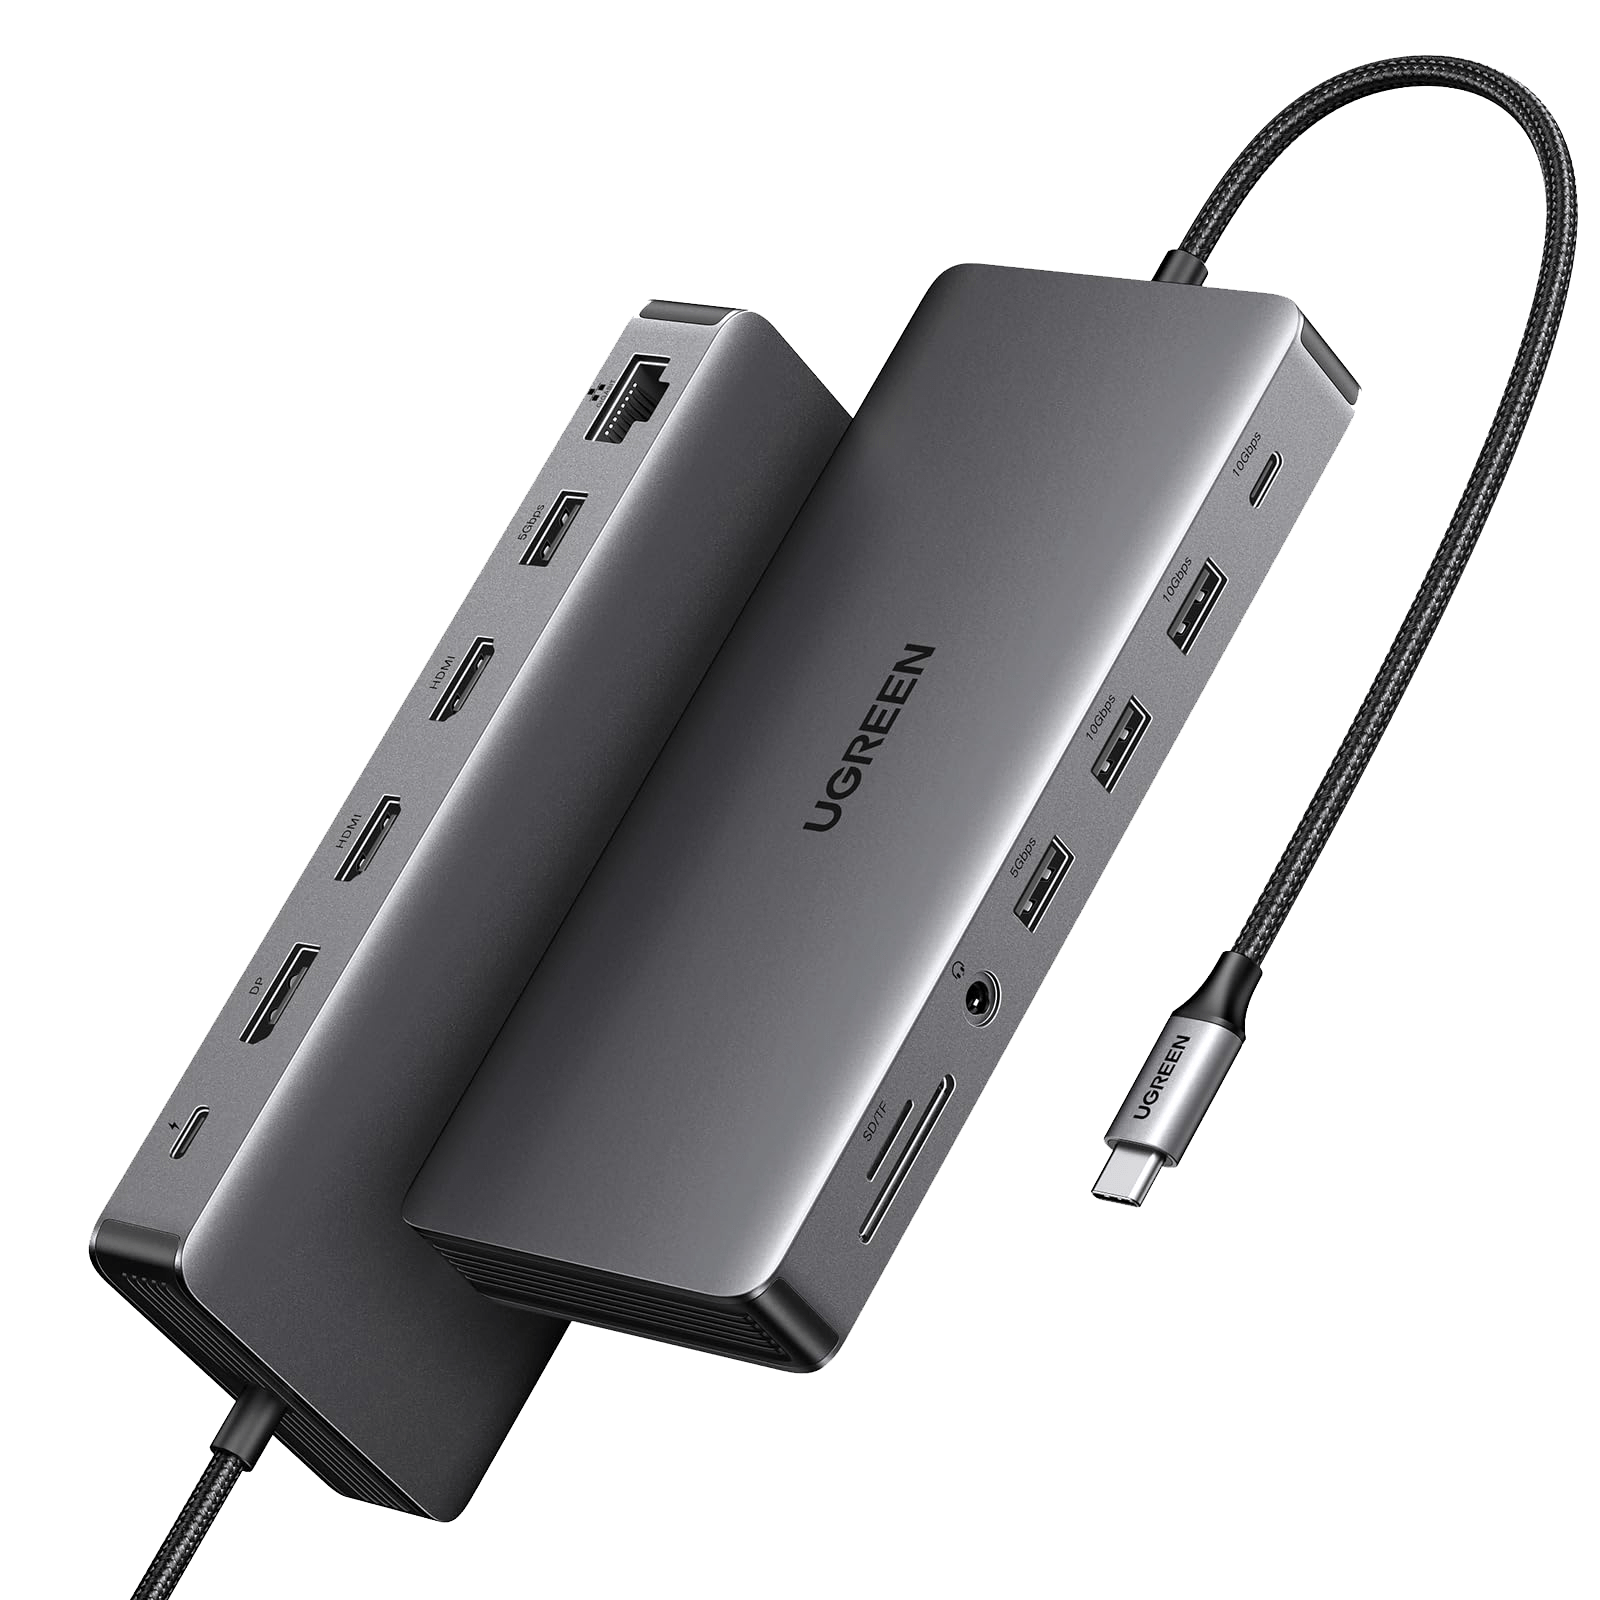 UGREEN Thunderbolt 3 Dock USB Type C to HDMI HUB Adapter for